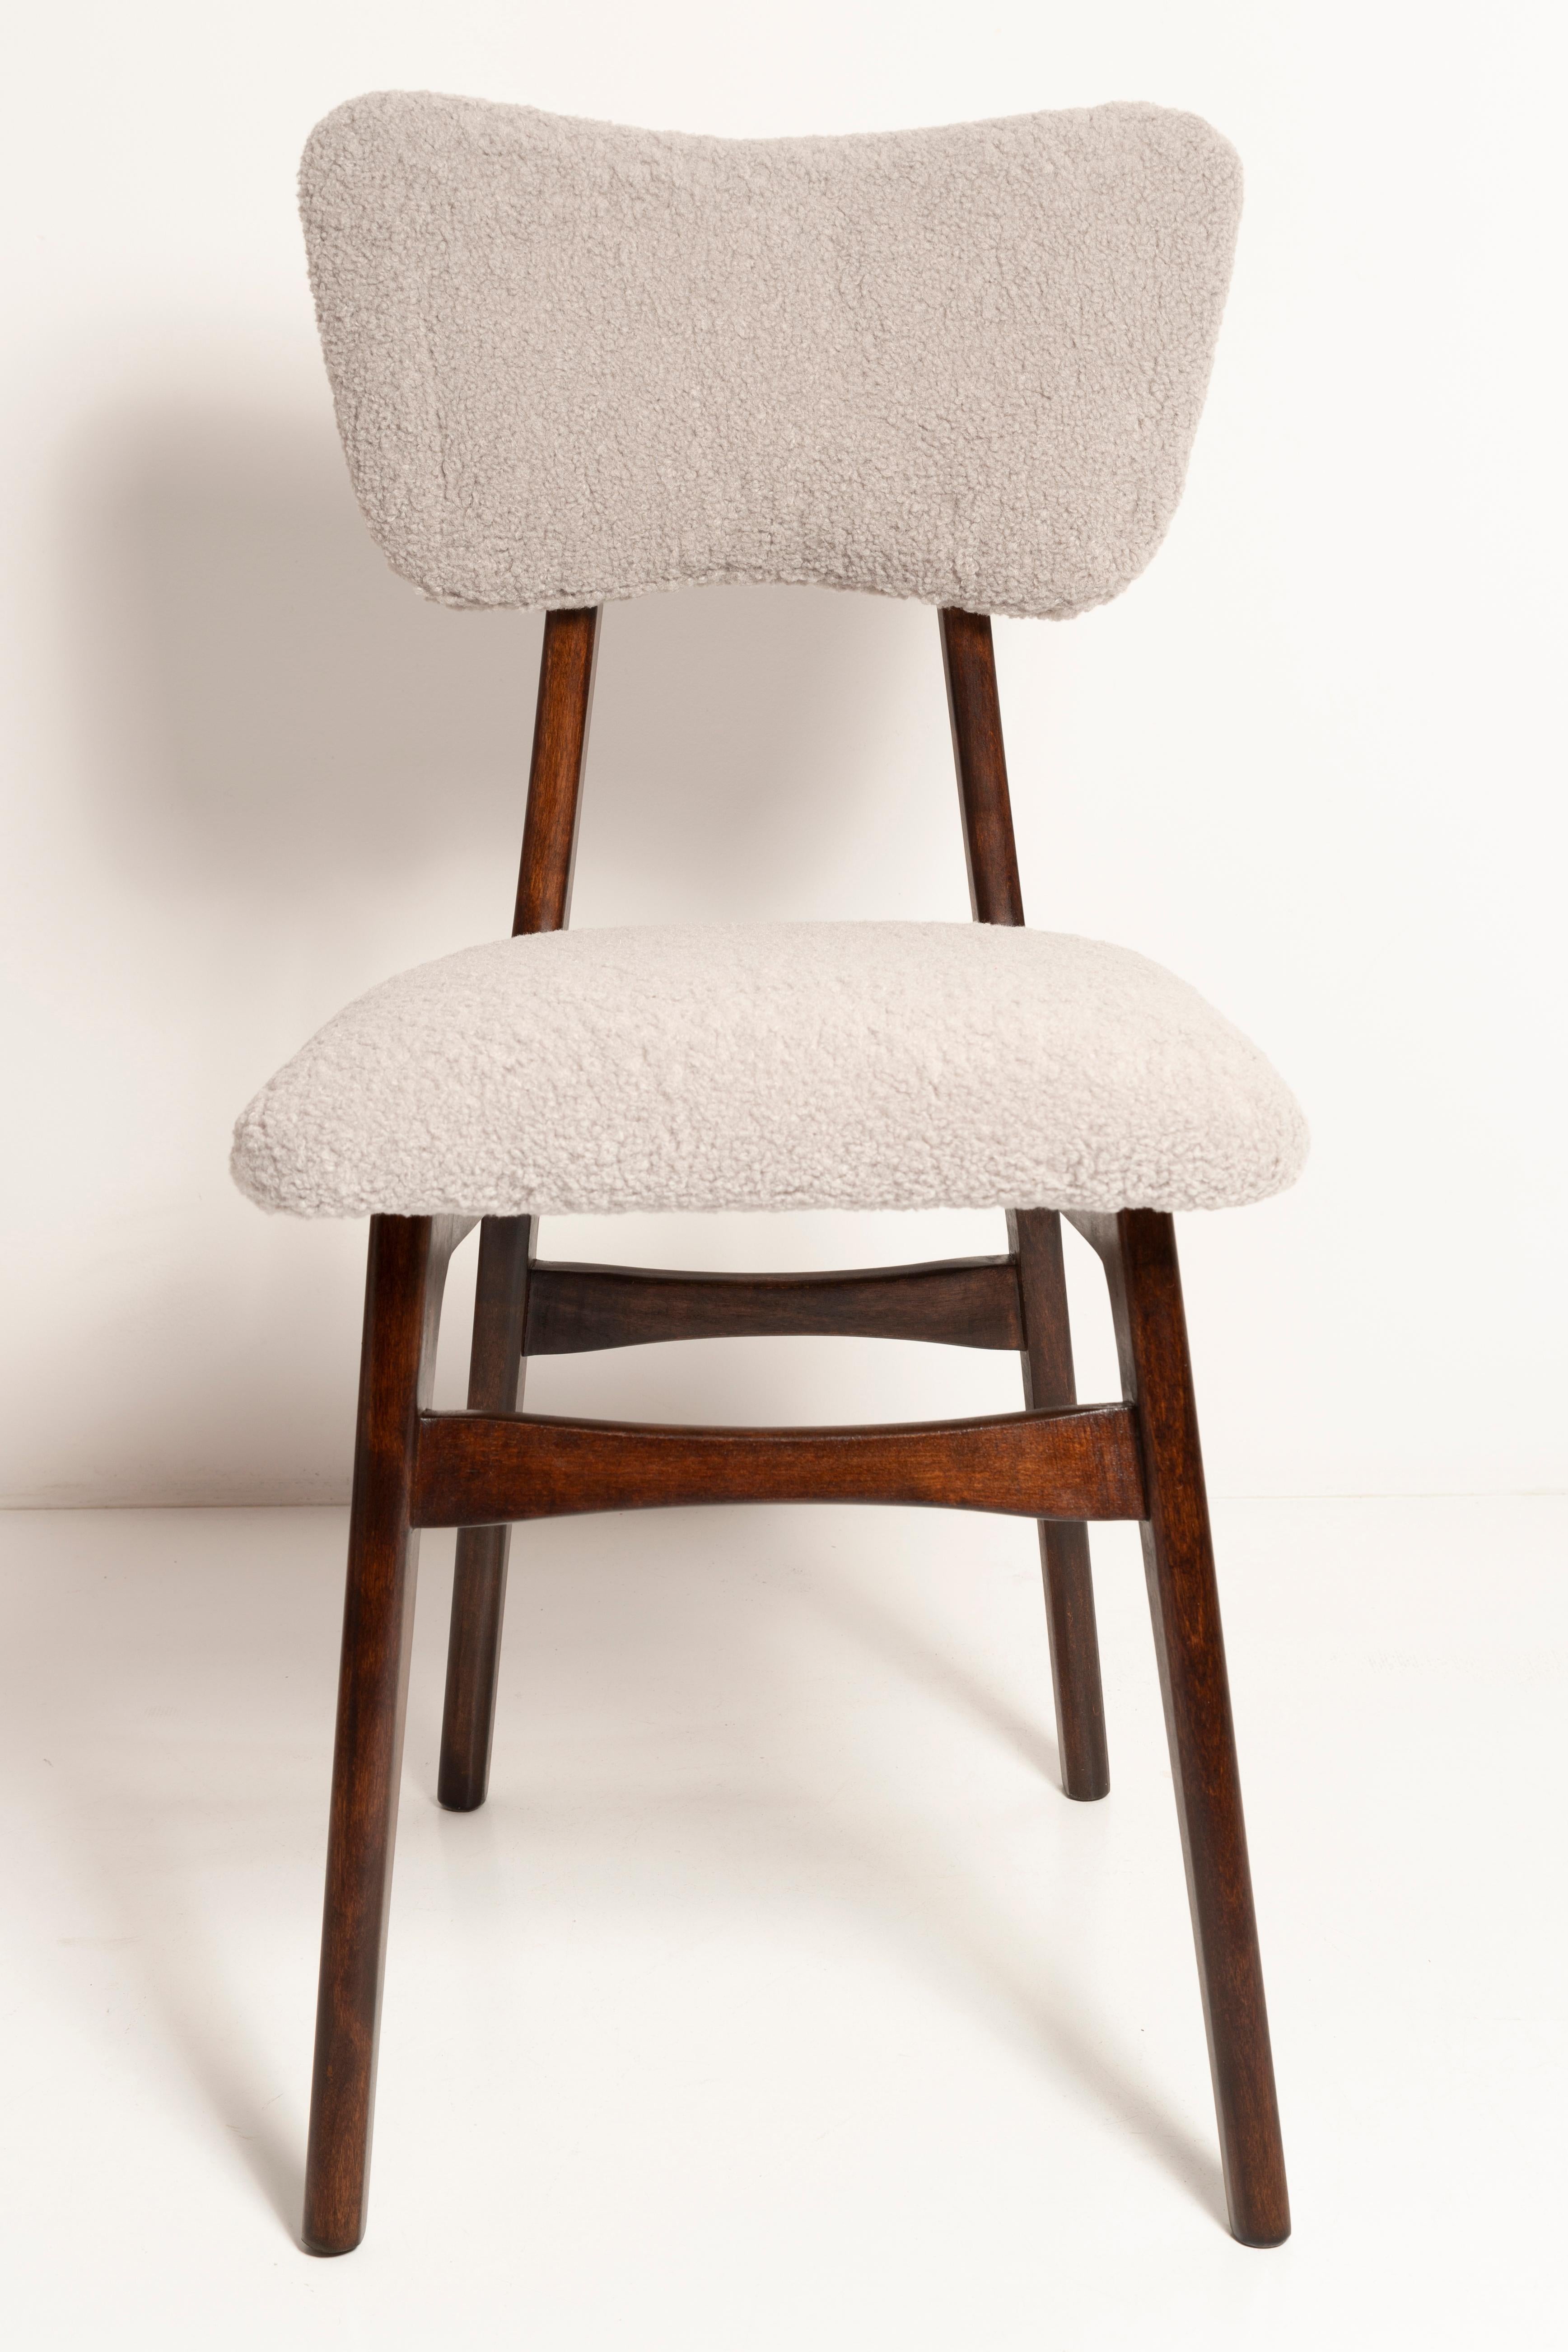 Set of Ten Mid Century Chairs, Light Gray Boucle, Dark Walnut Wood, Europe, 1960s For Sale 4